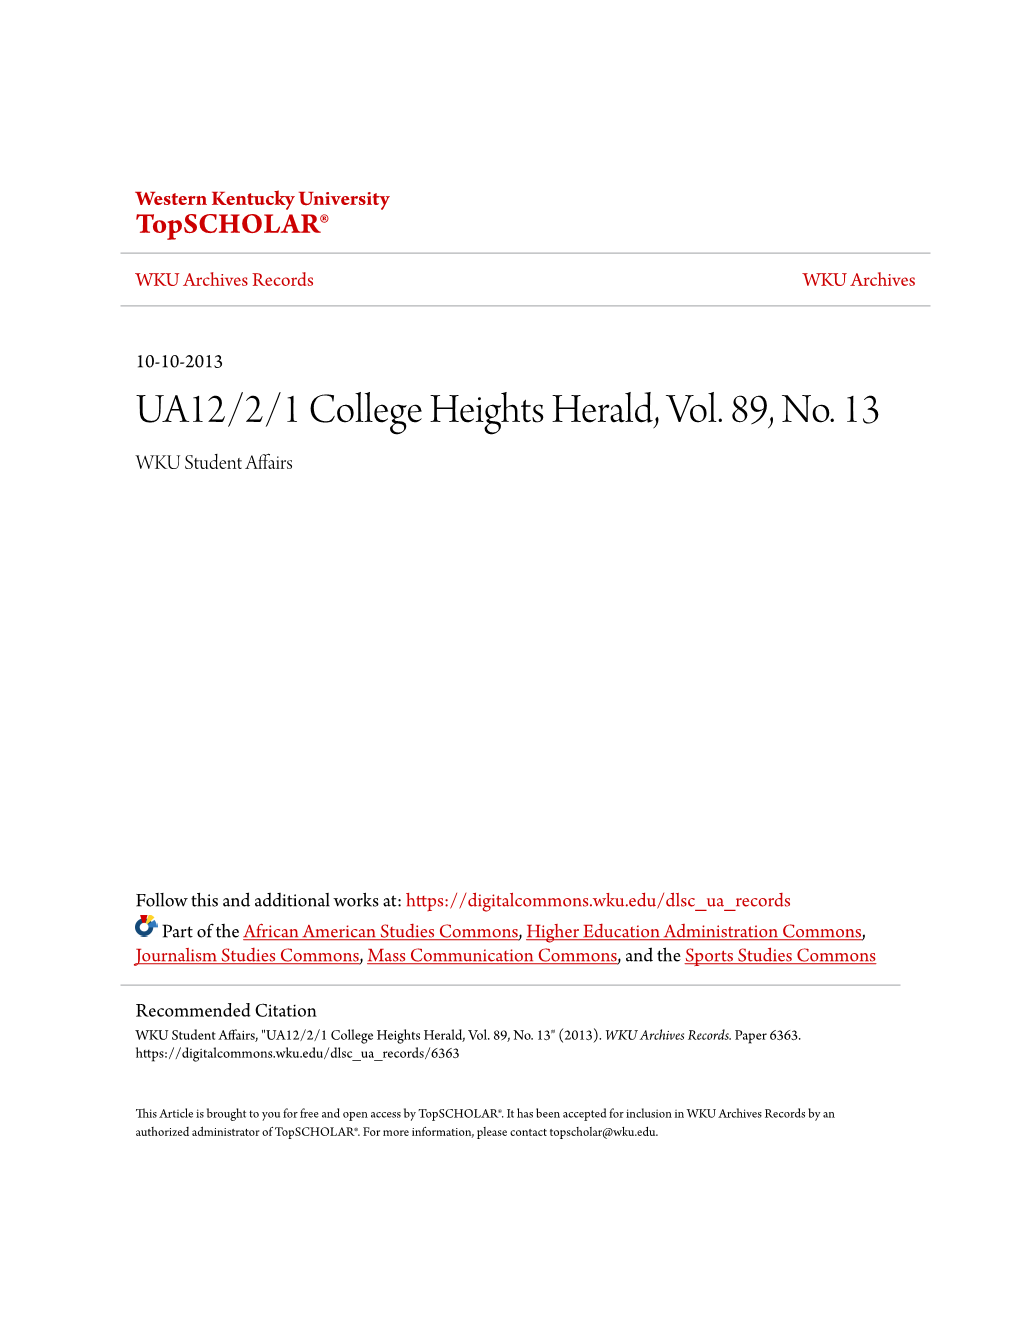 UA12/2/1 College Heights Herald, Vol. 89, No. 13 WKU Student Affairs